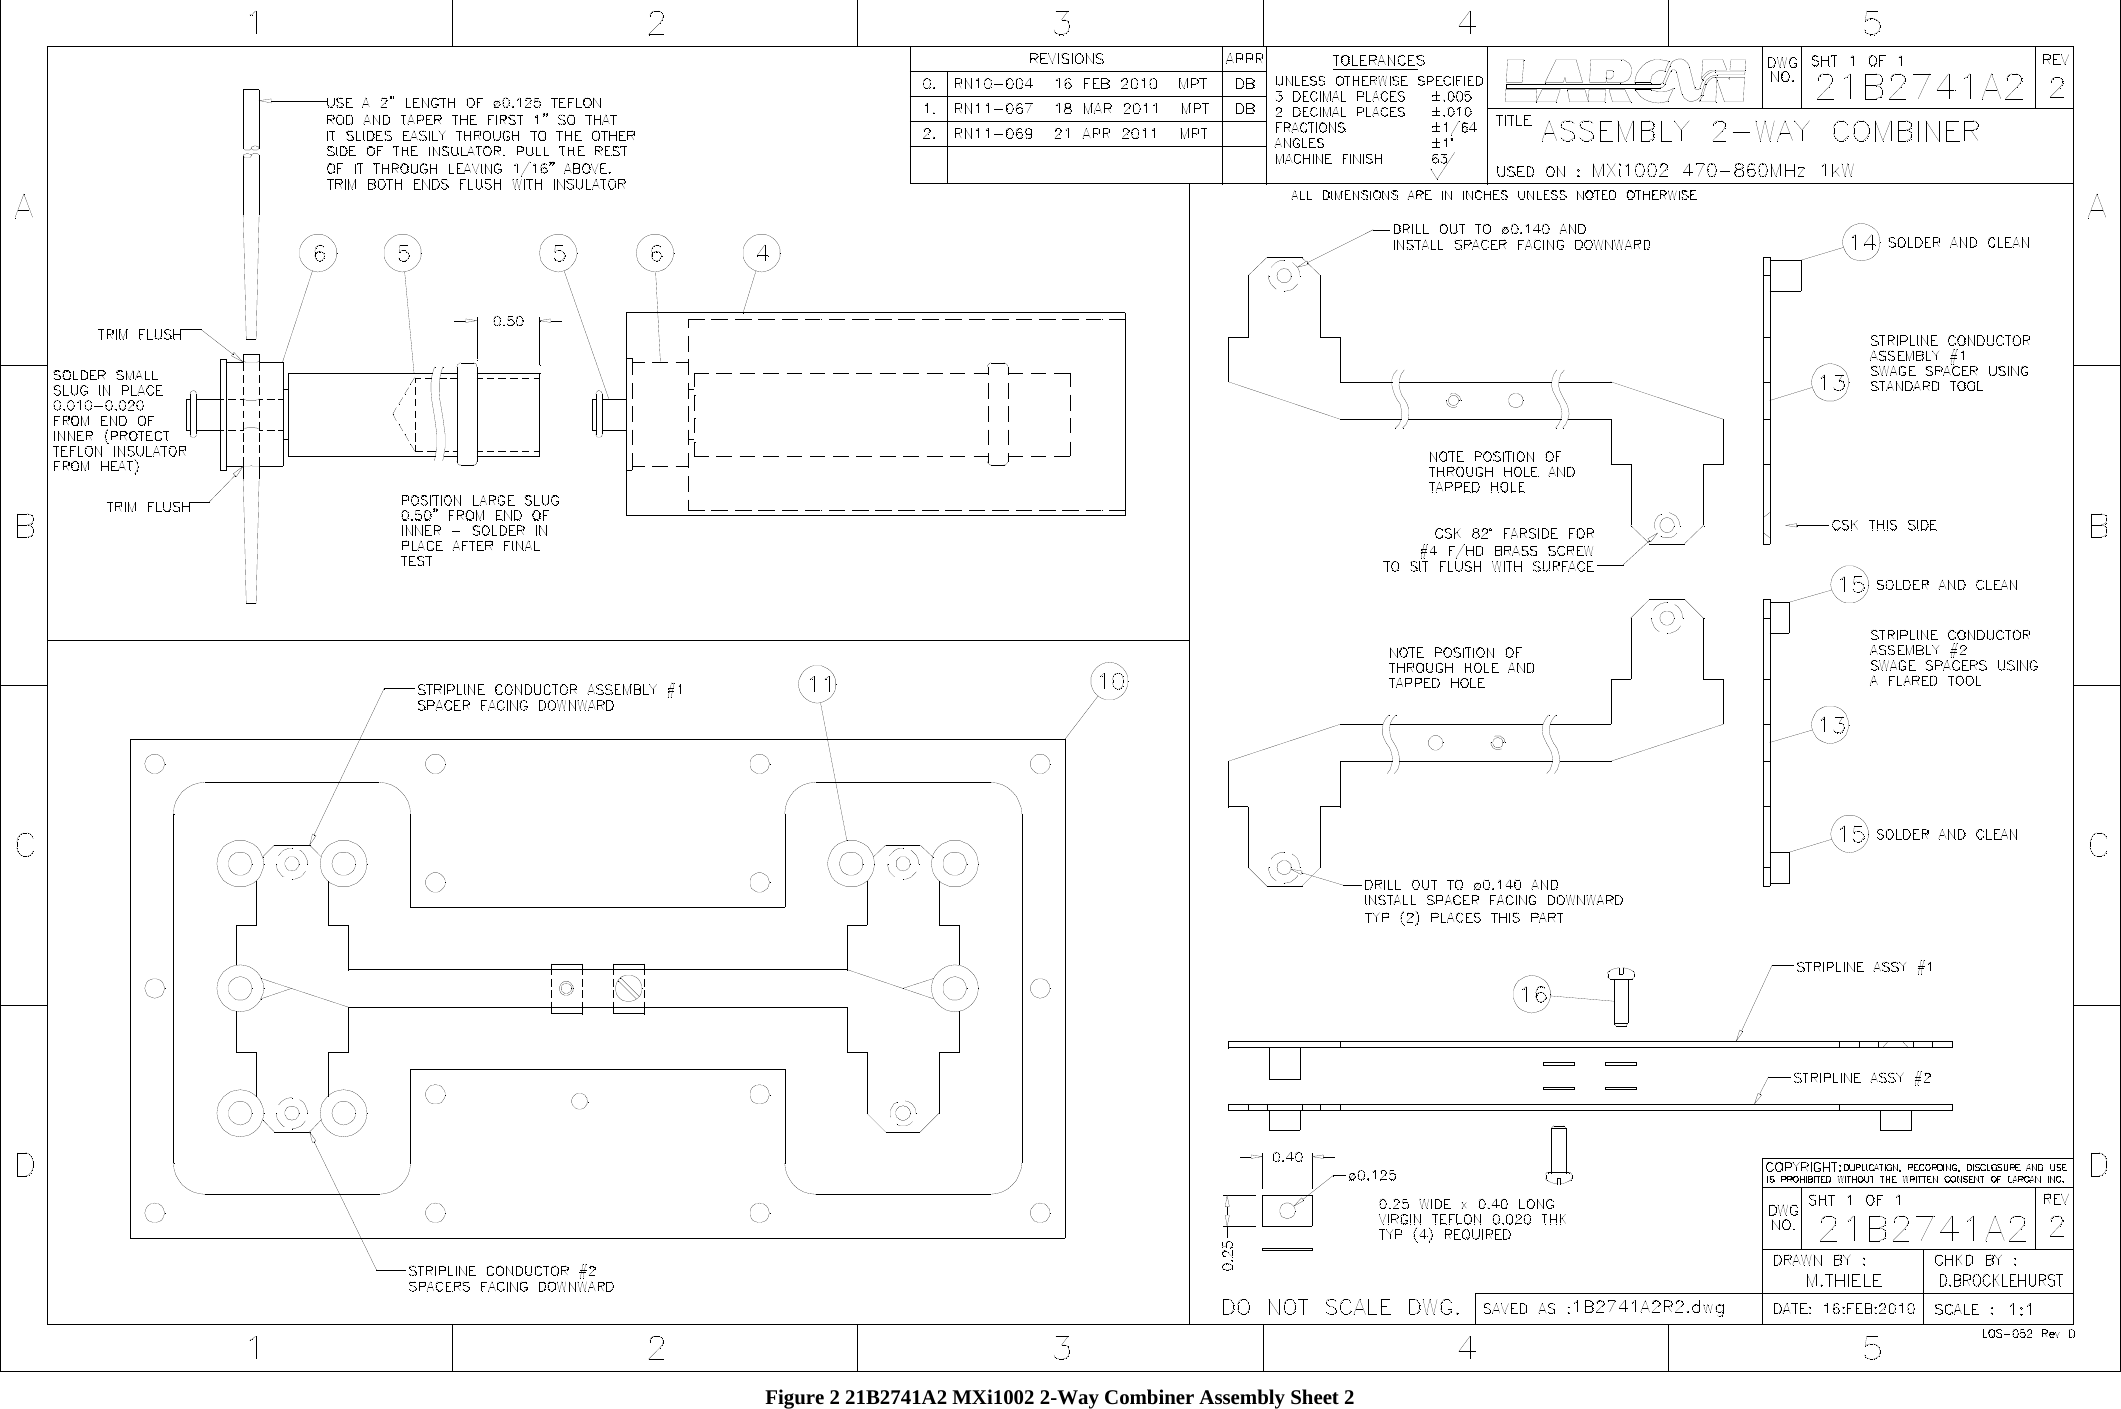    Figure 2 21B2741A2 MXi1002 2-Way Combiner Assembly Sheet 2 